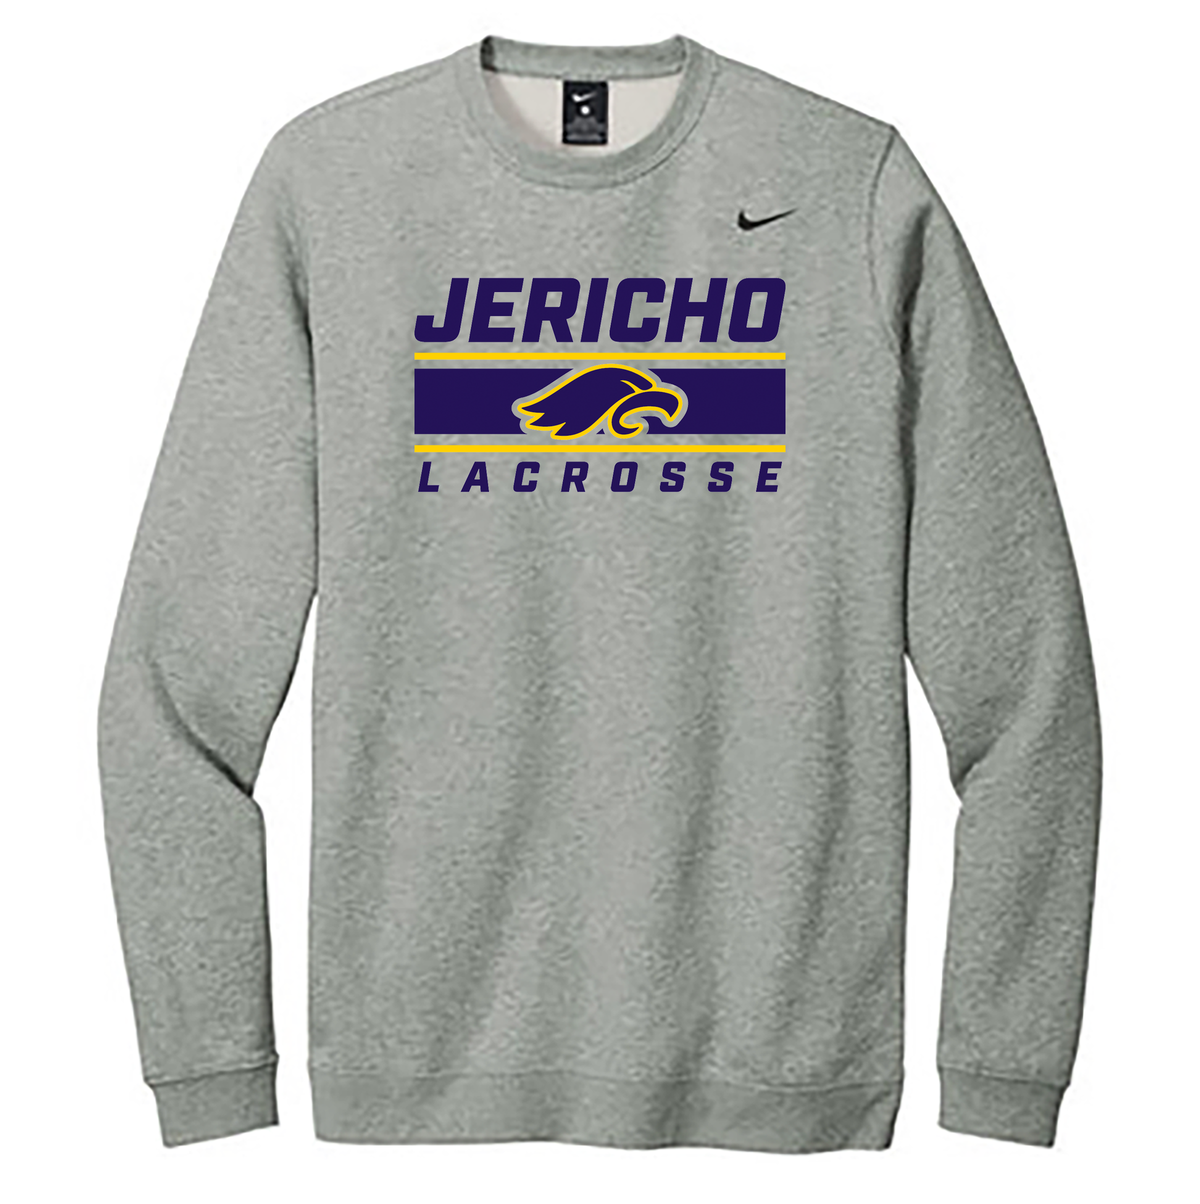 Jericho HS Lacrosse Nike Fleece Crew Neck